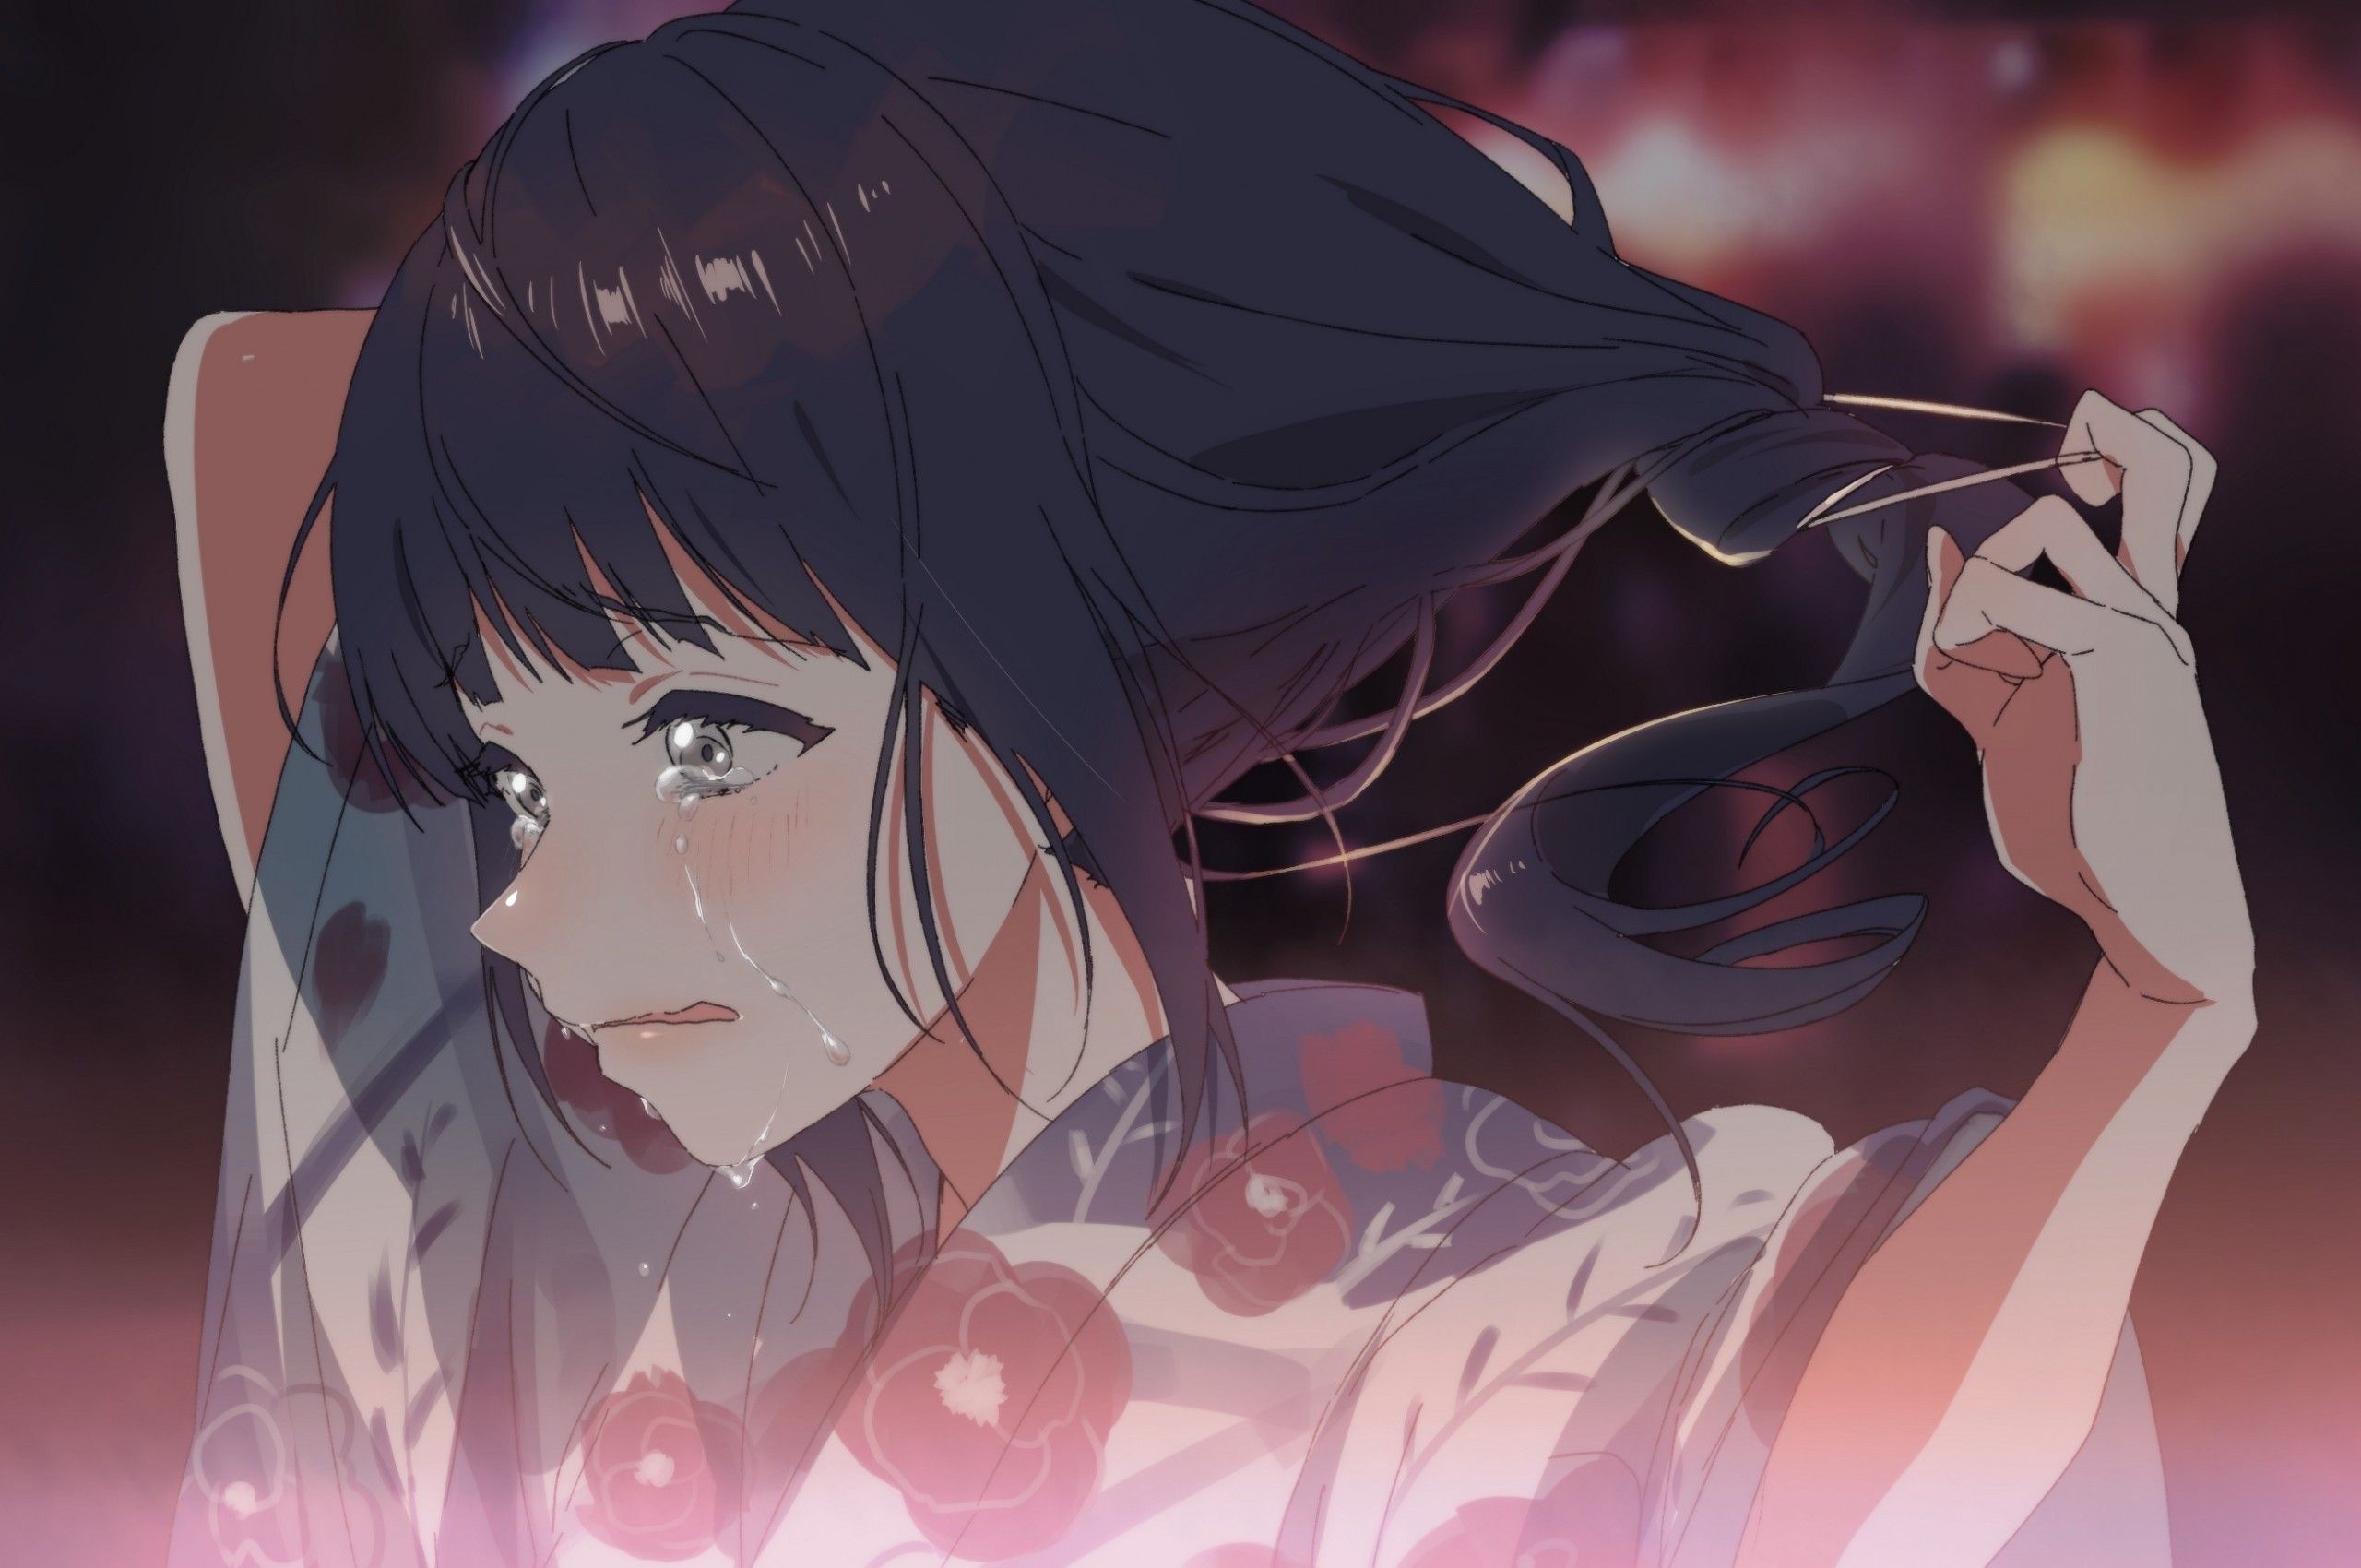 Sad Depressed Anime Girl Dasktop Wallpapers - Wallpaper Cave